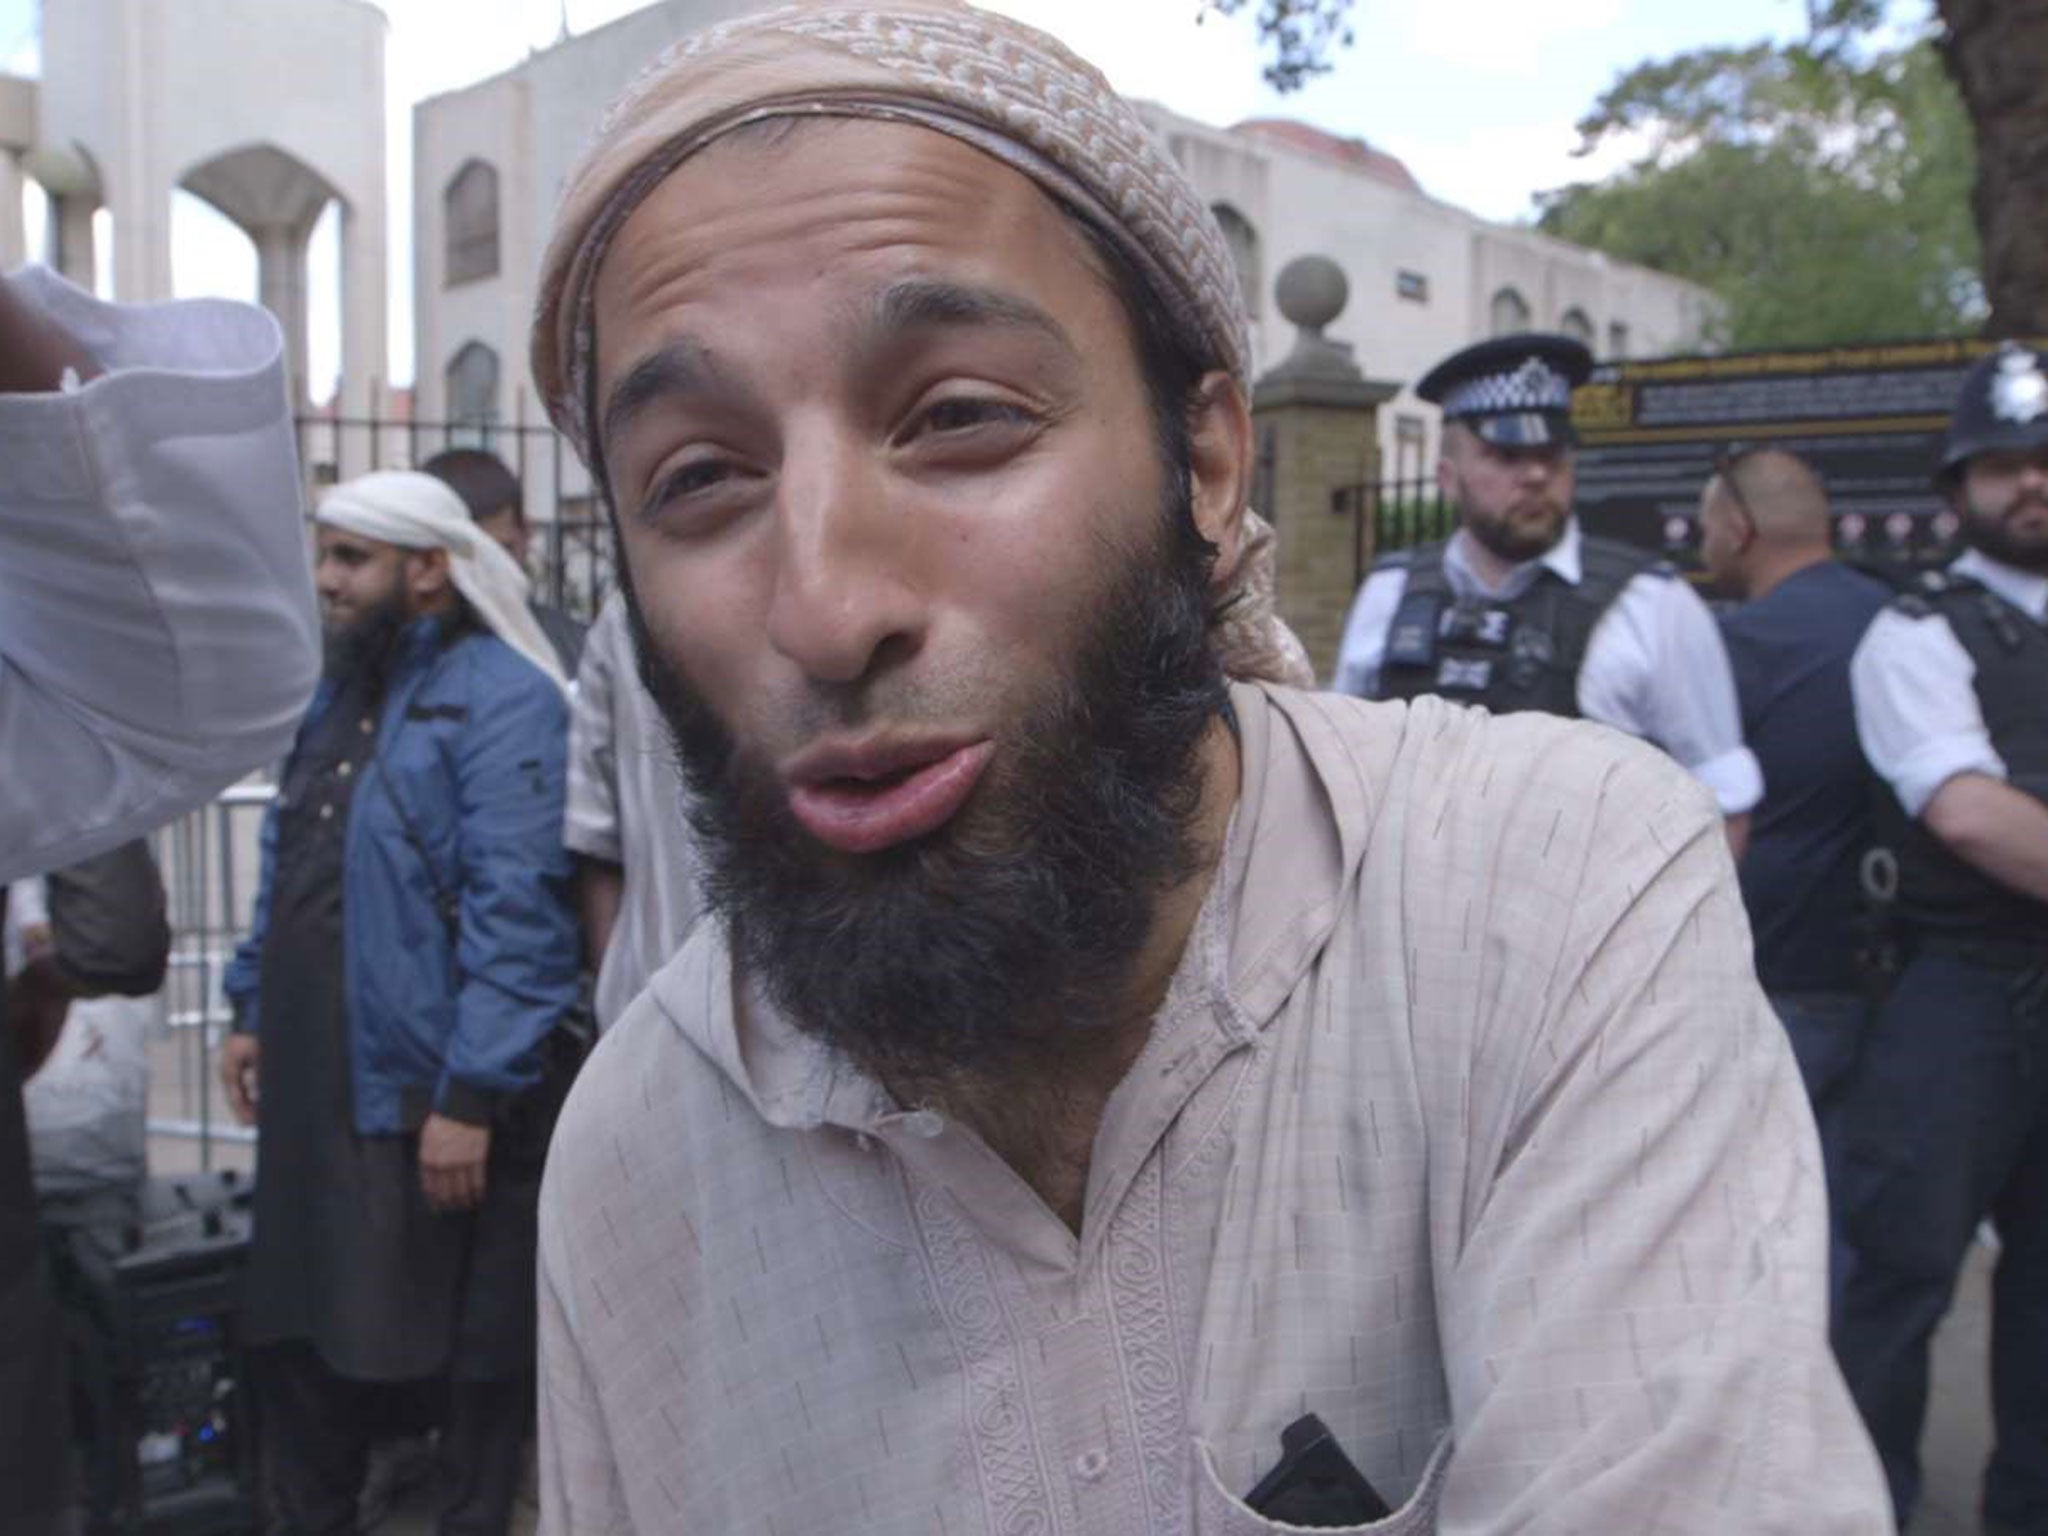 Abu Haleema appeared in ‘The Jihadis Next Door’ documentary alongside London Bridge attacker Khuram Butt